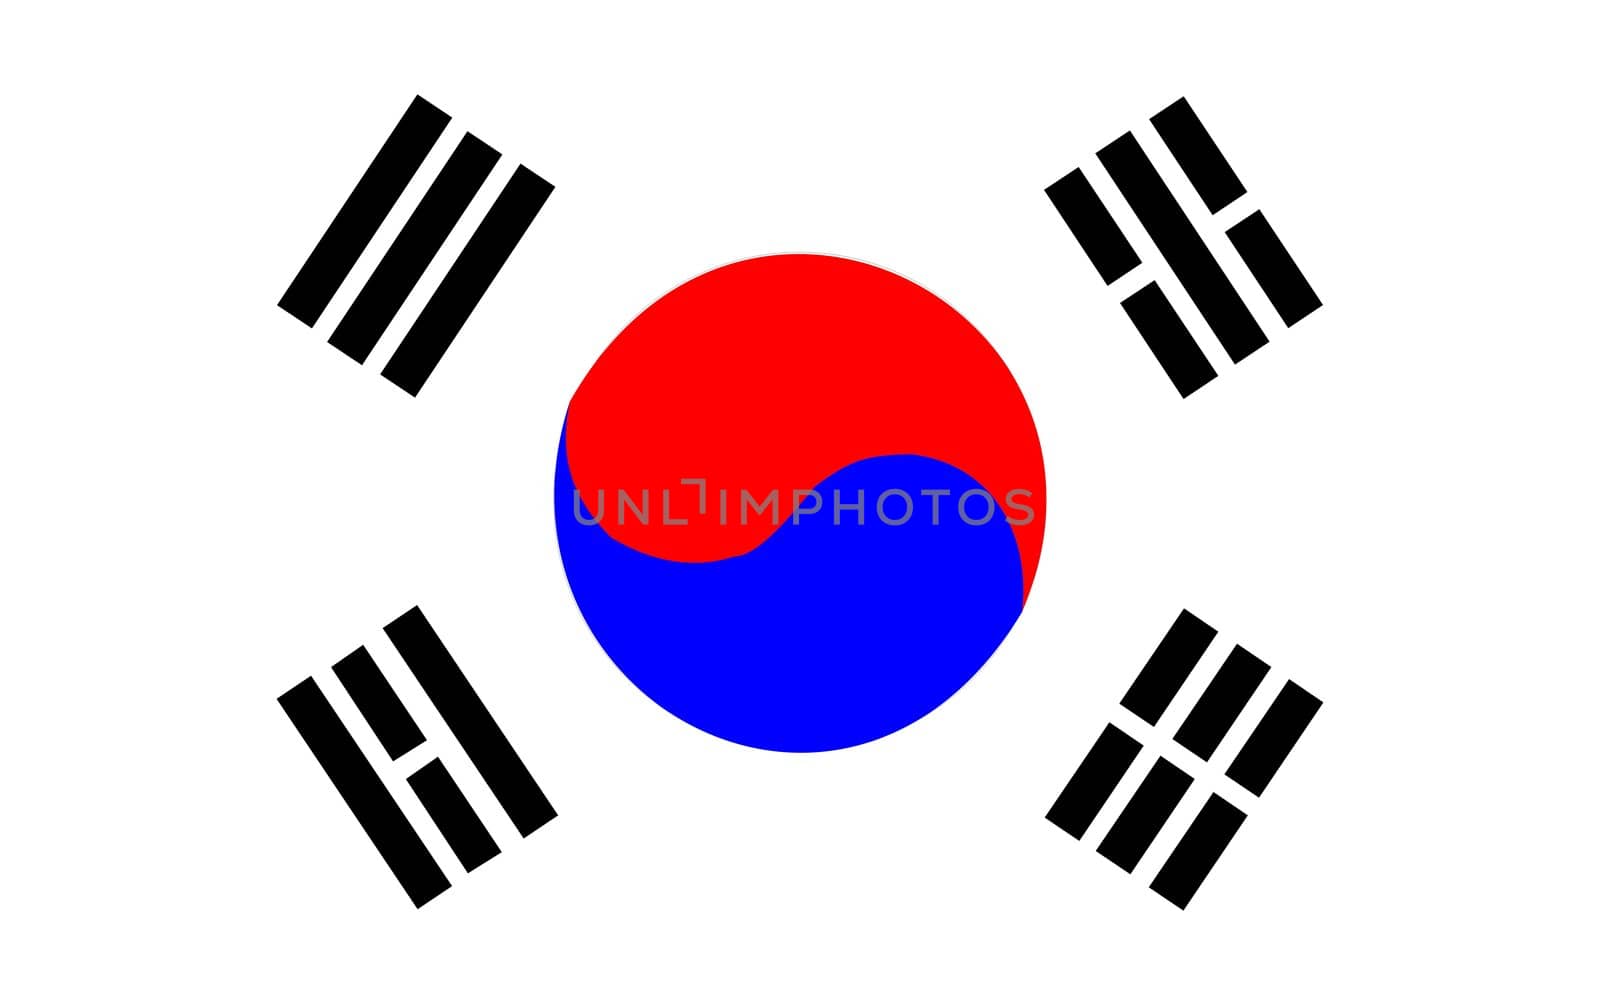 2D illustration of the flag of South Korea